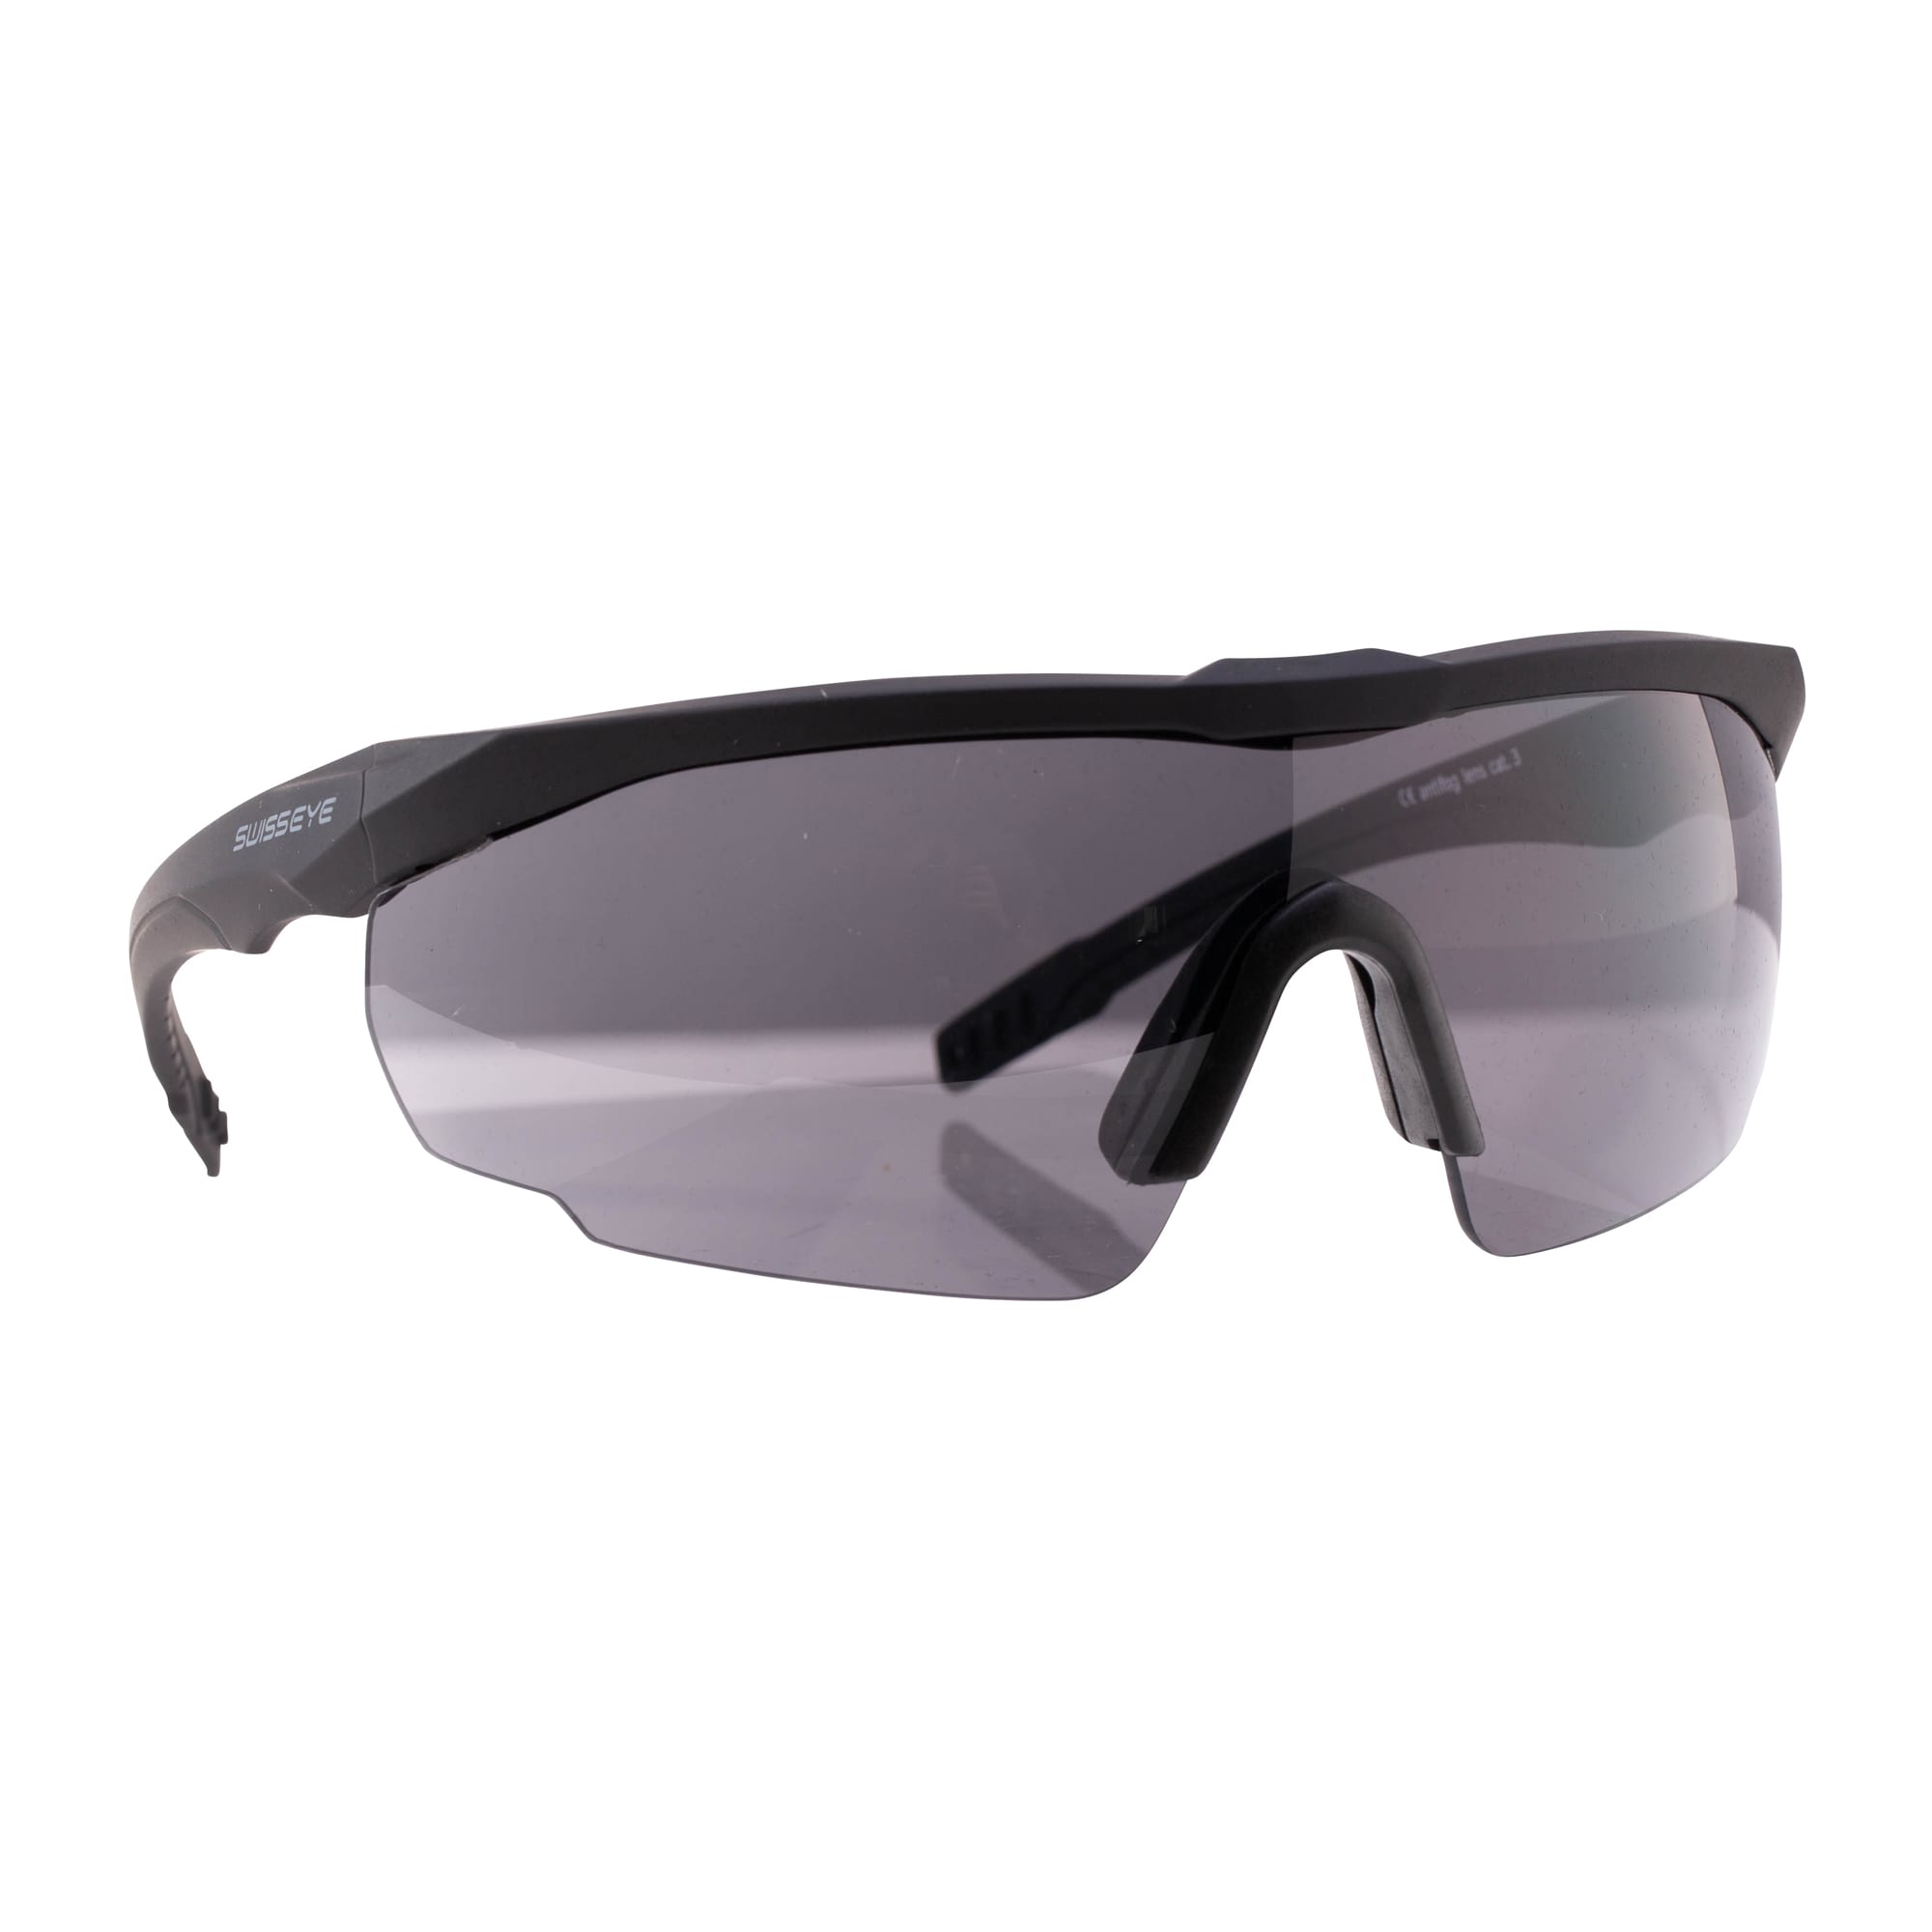 Purchase The Swiss Eye Blackhawk Safety Glasses Black By Asmc